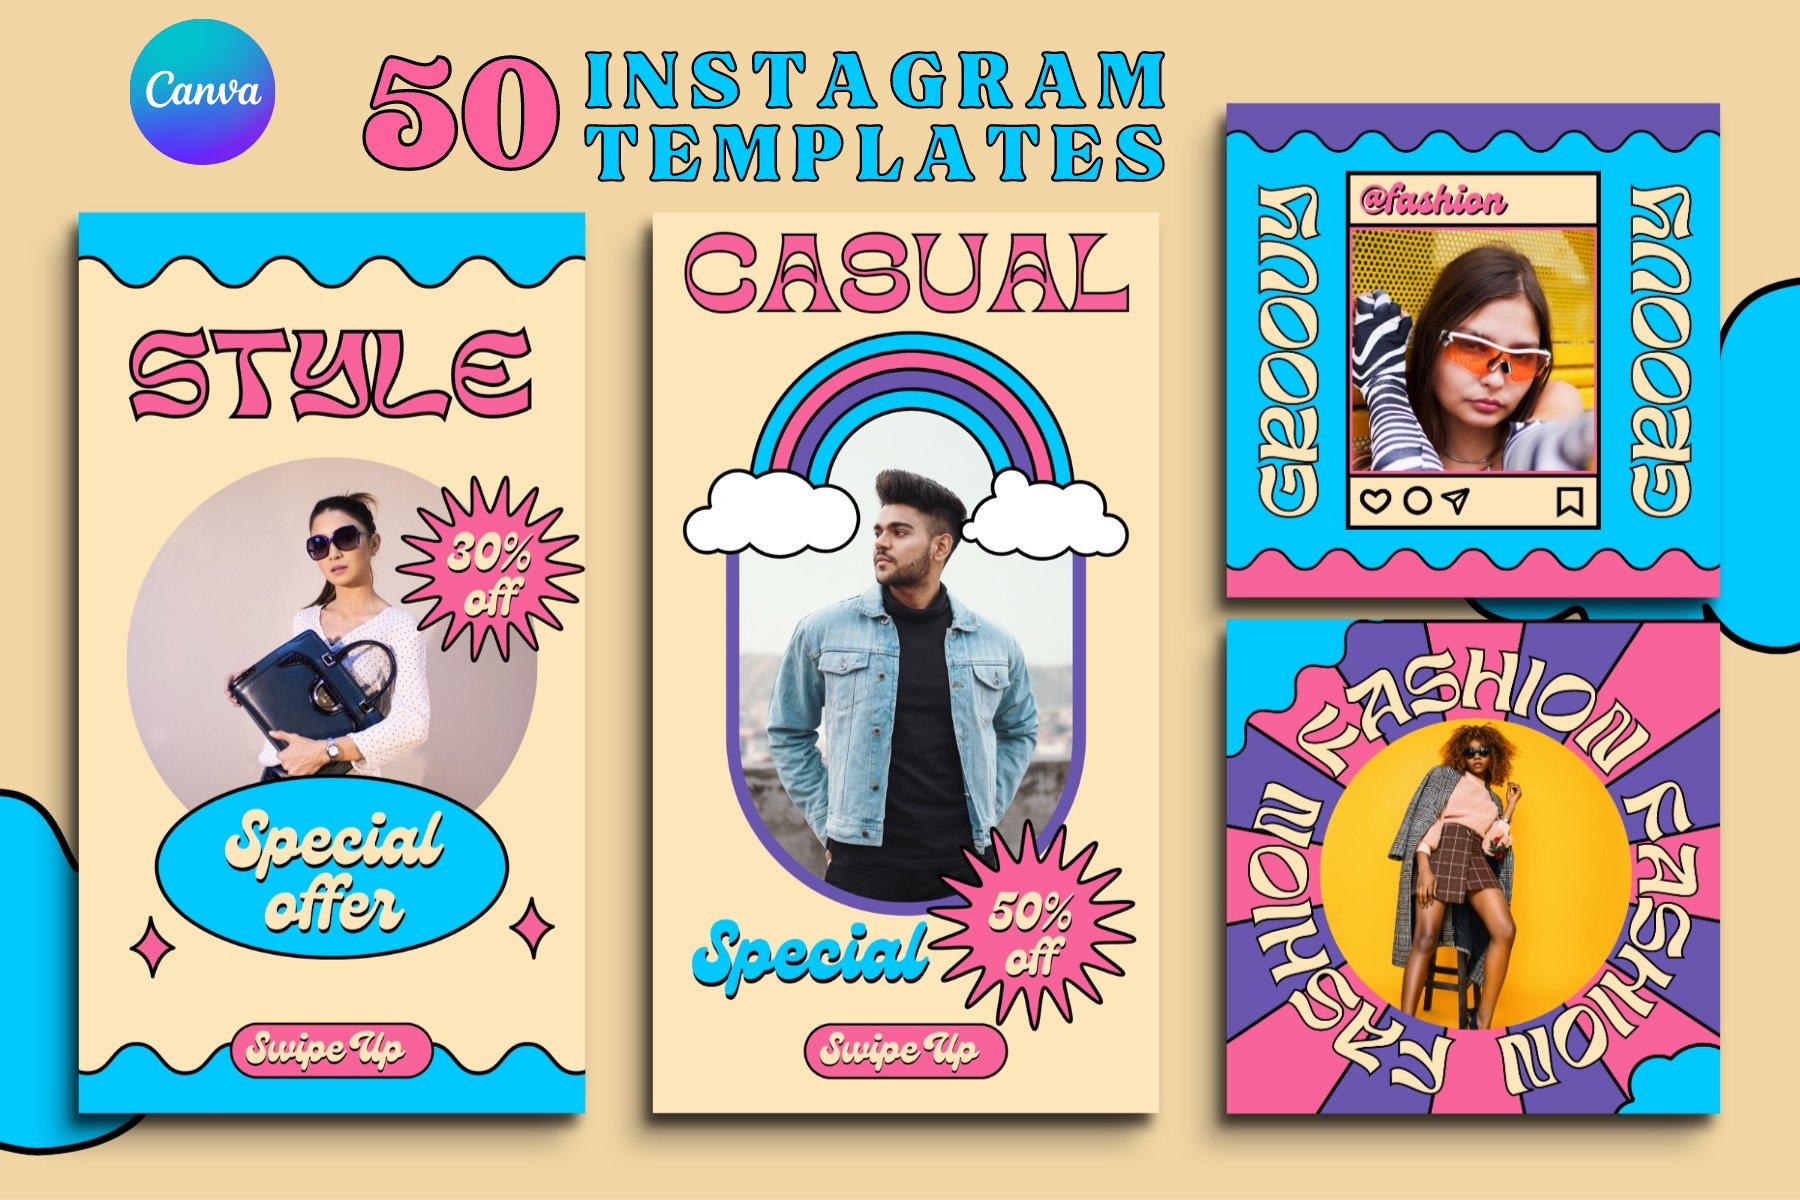 Bundle includes 50 Instagram templates.